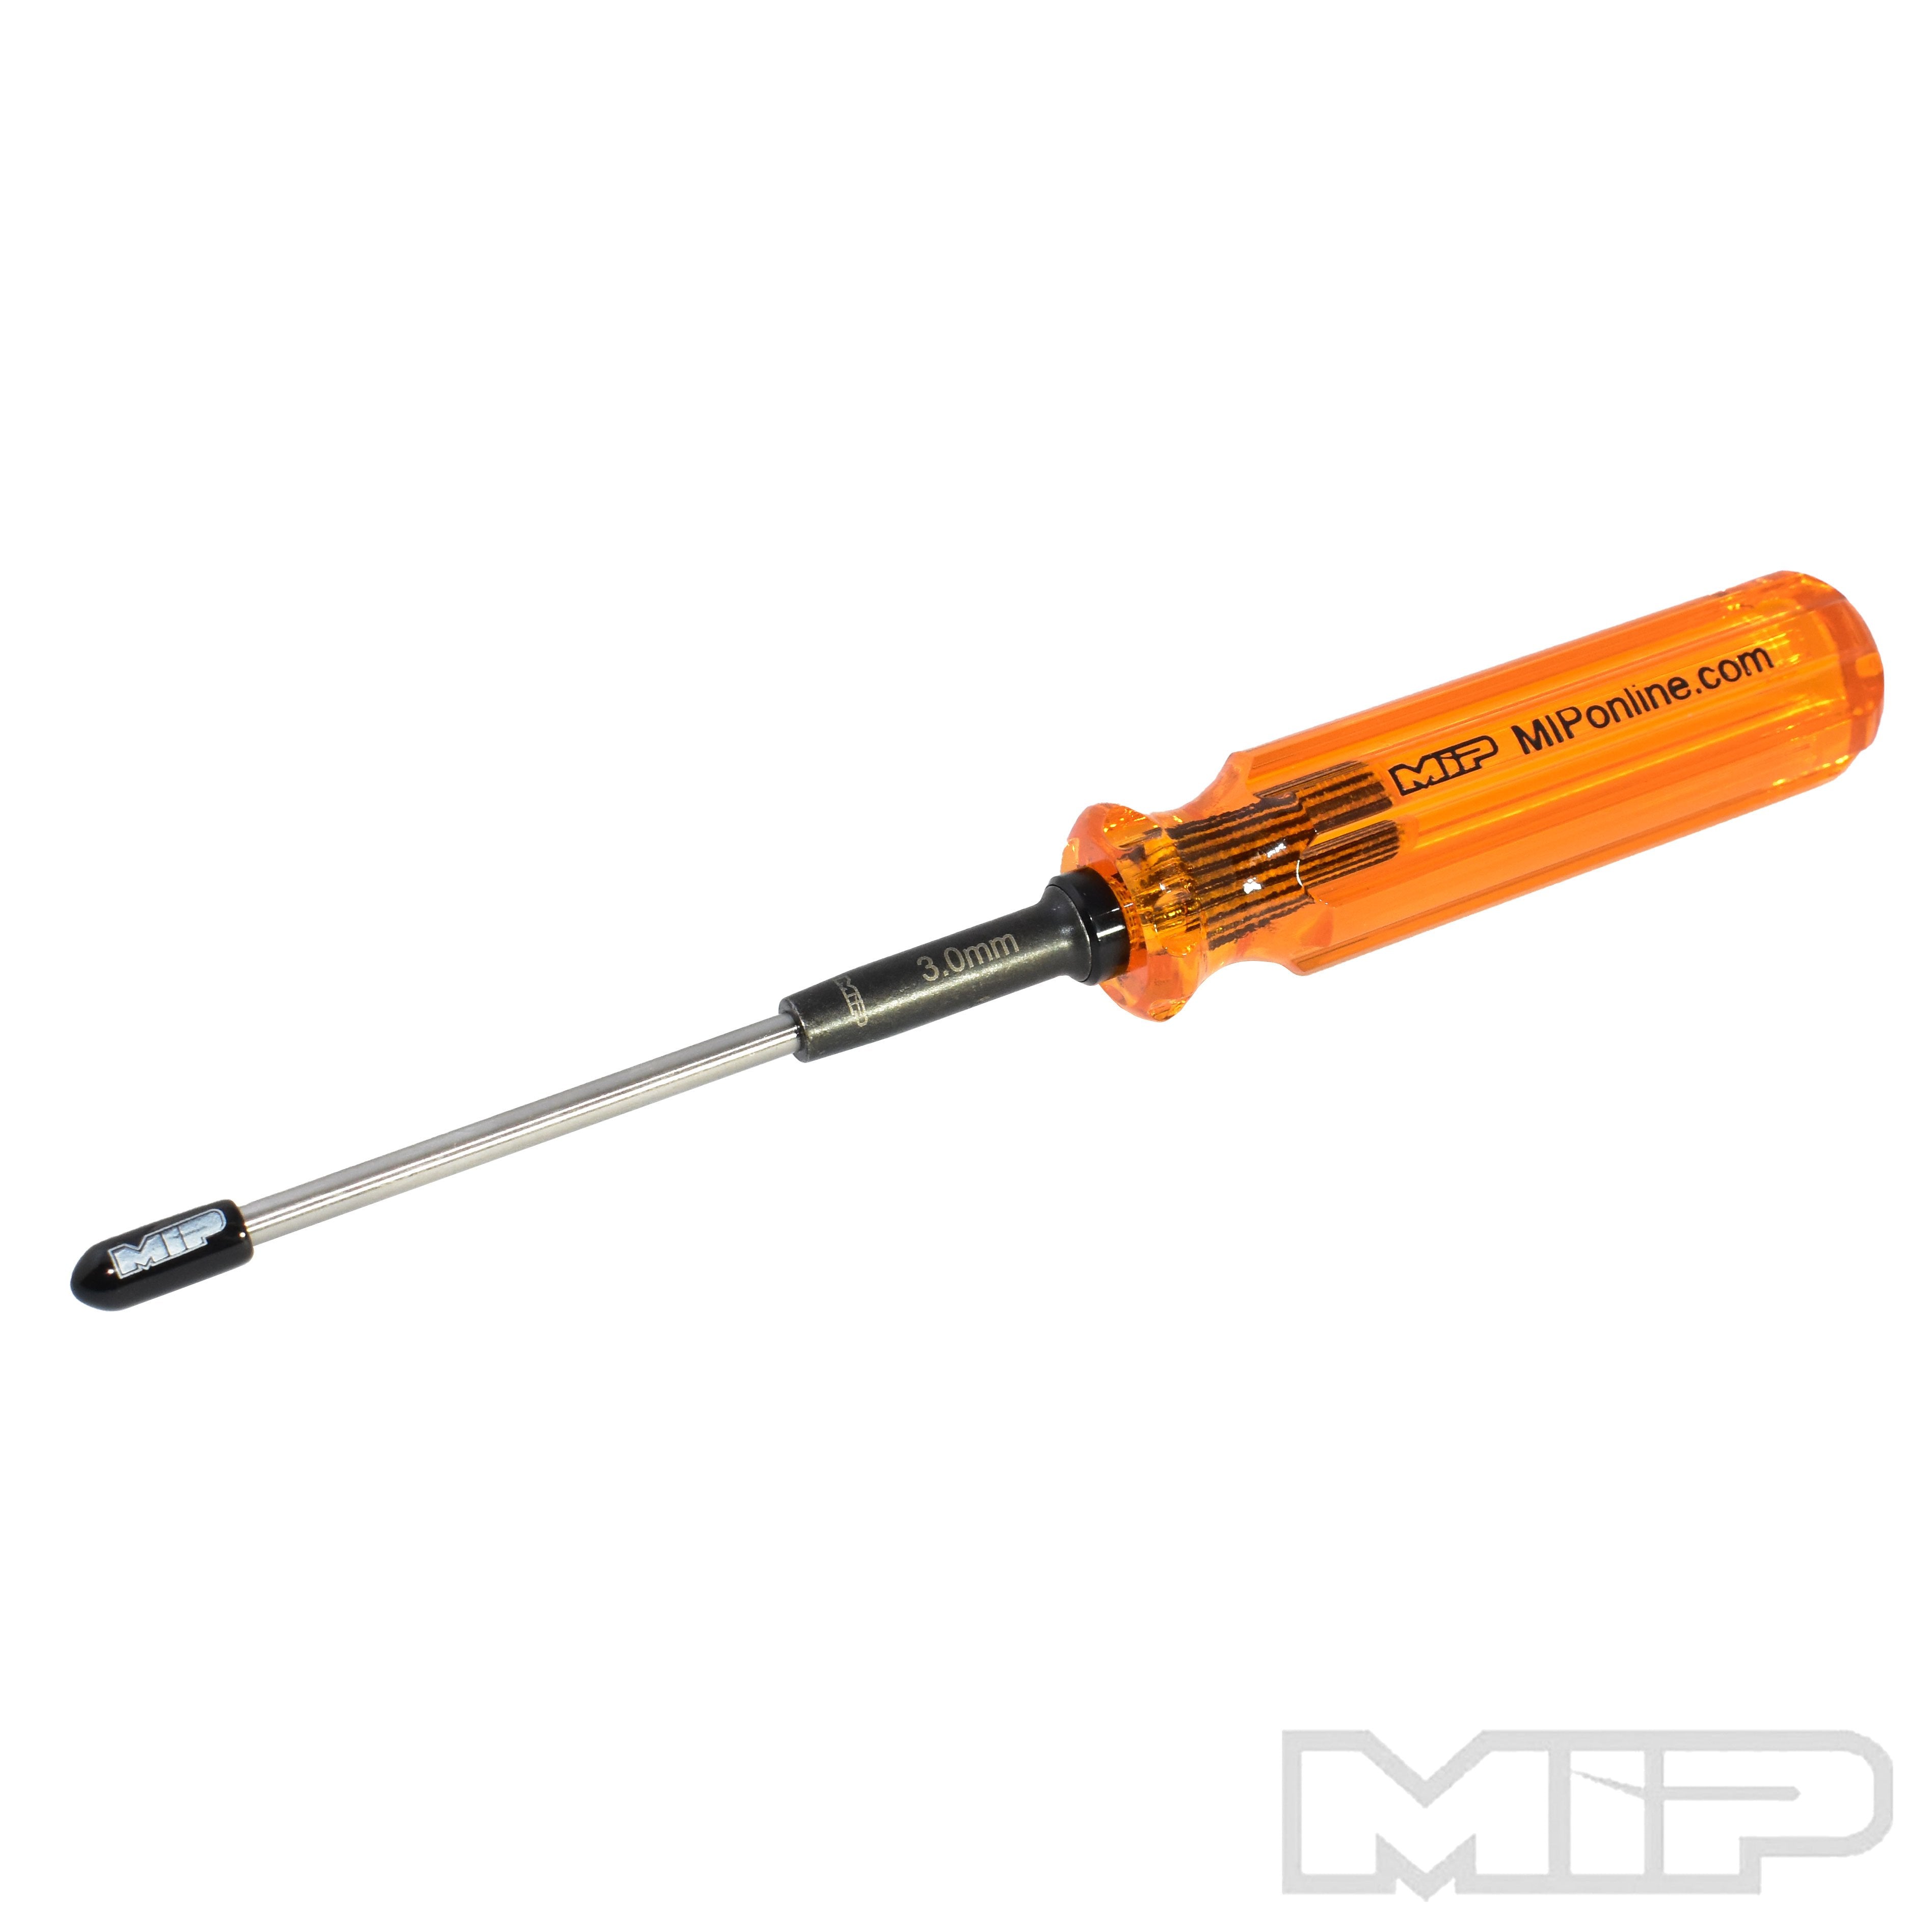 MIP 9211 3.0mm Hex Driver Wrench Gen 2